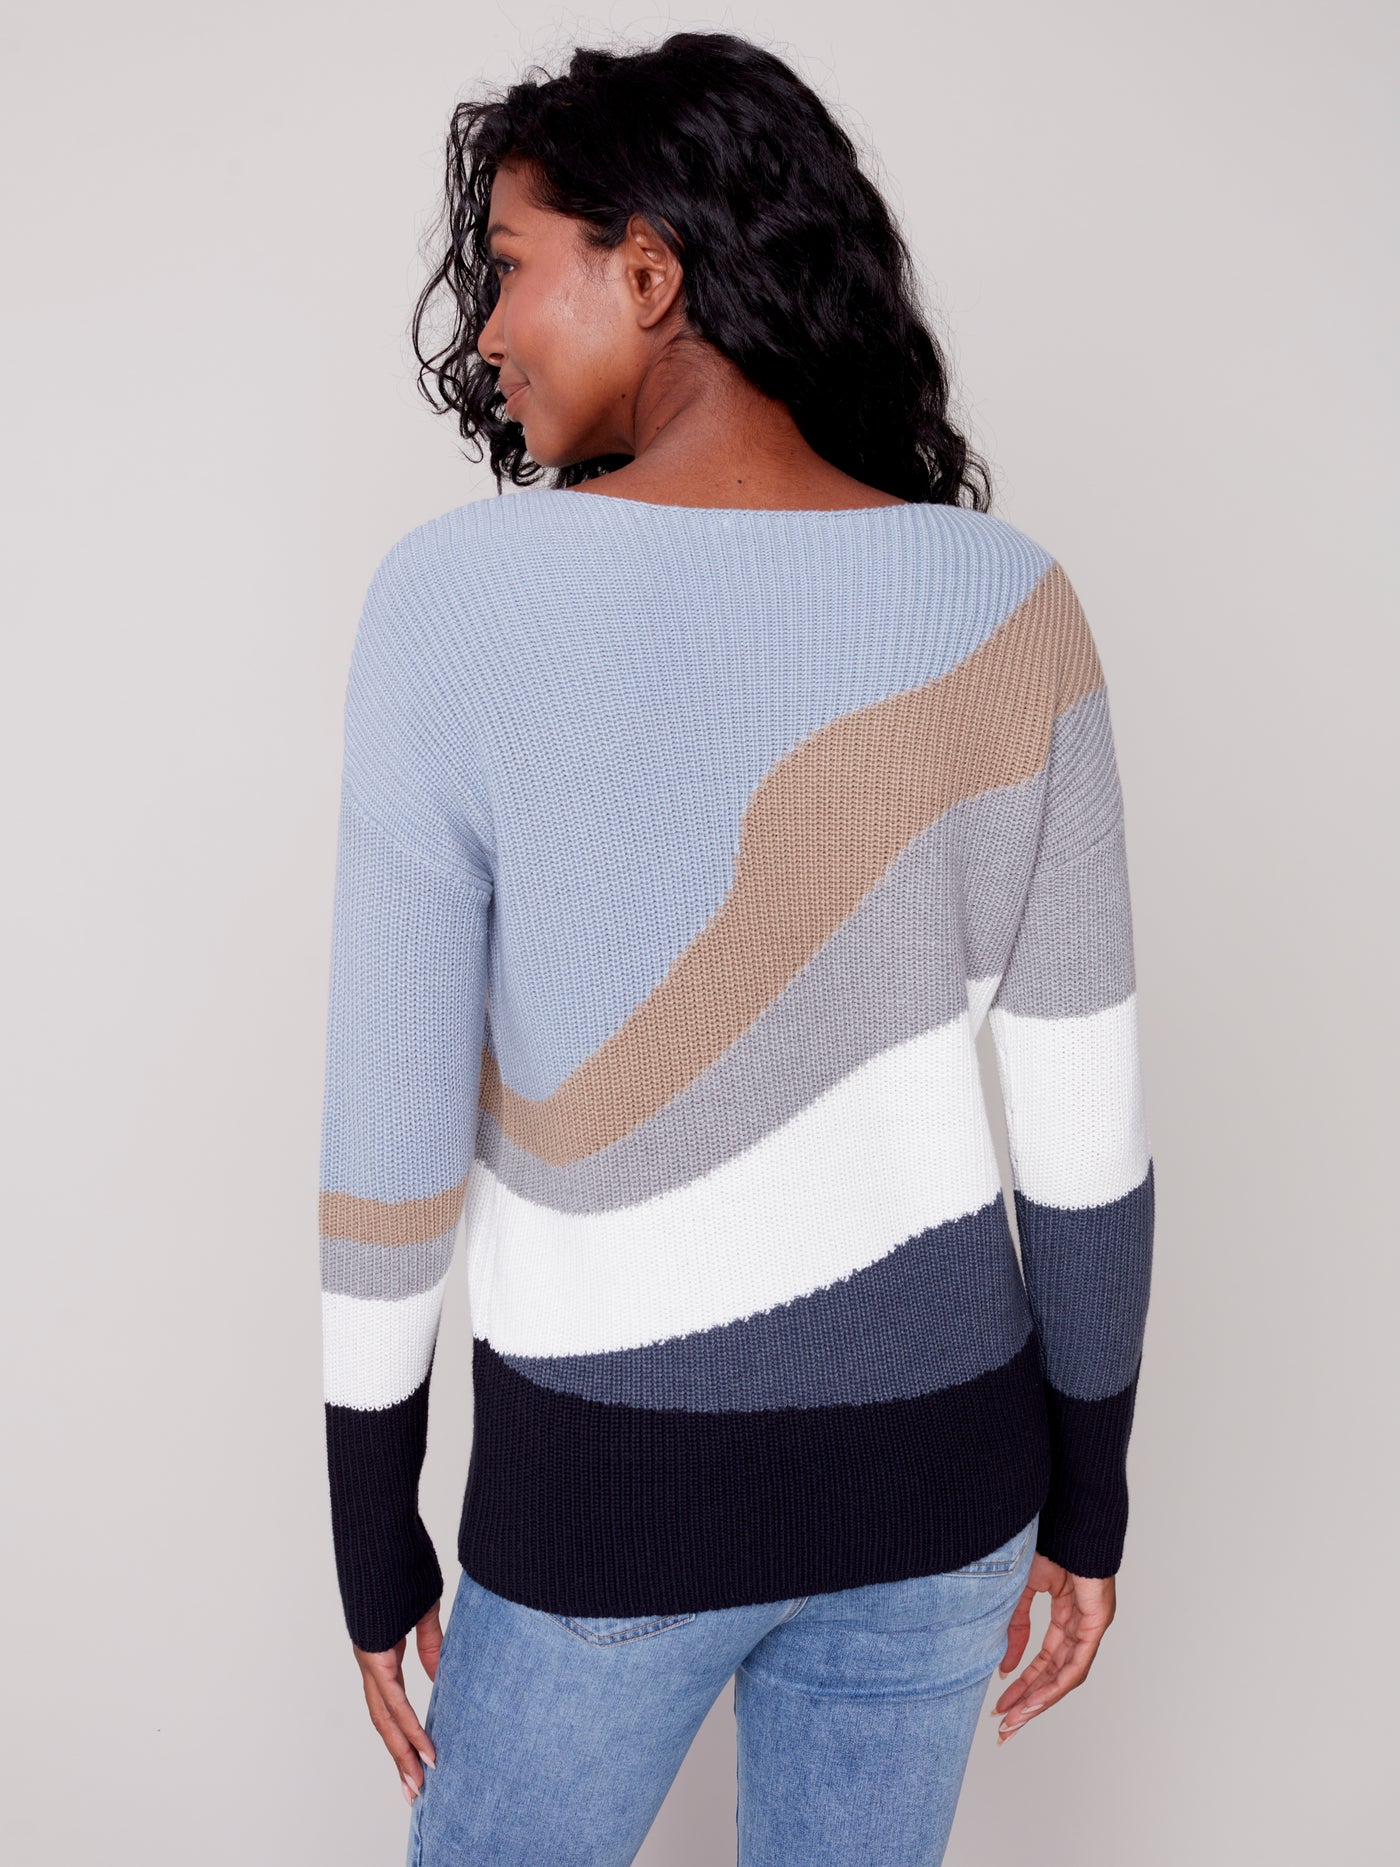 Charlie B Top - Colour Block Sweater - Blue /Multi - MEDIUM